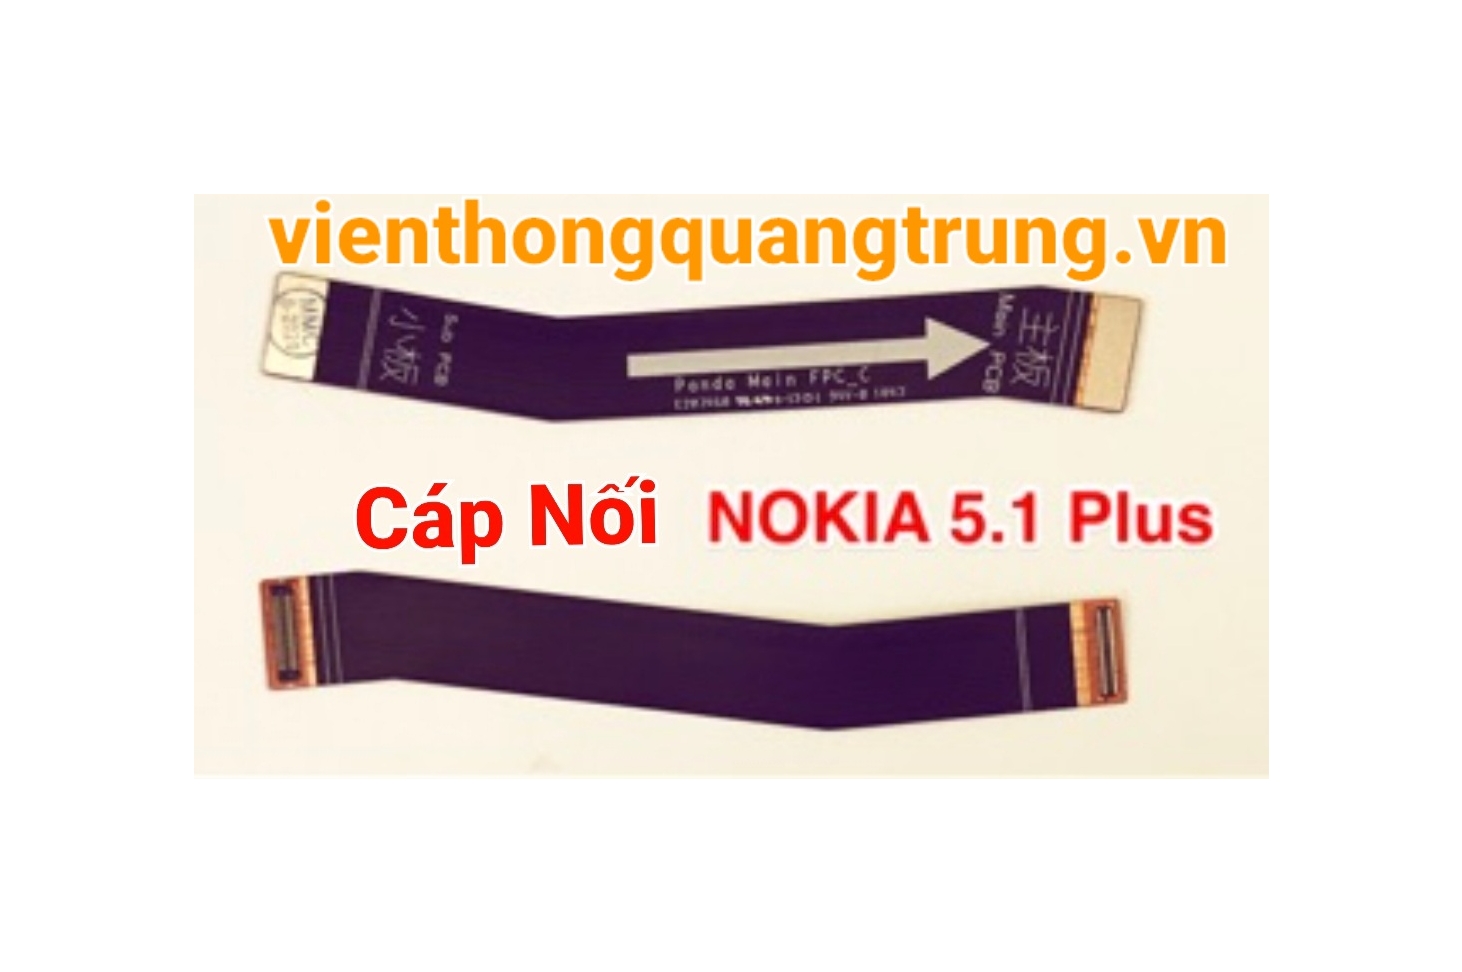 Cáp Nối nguồn Nokia 5.1Plus(zin tháo máy)